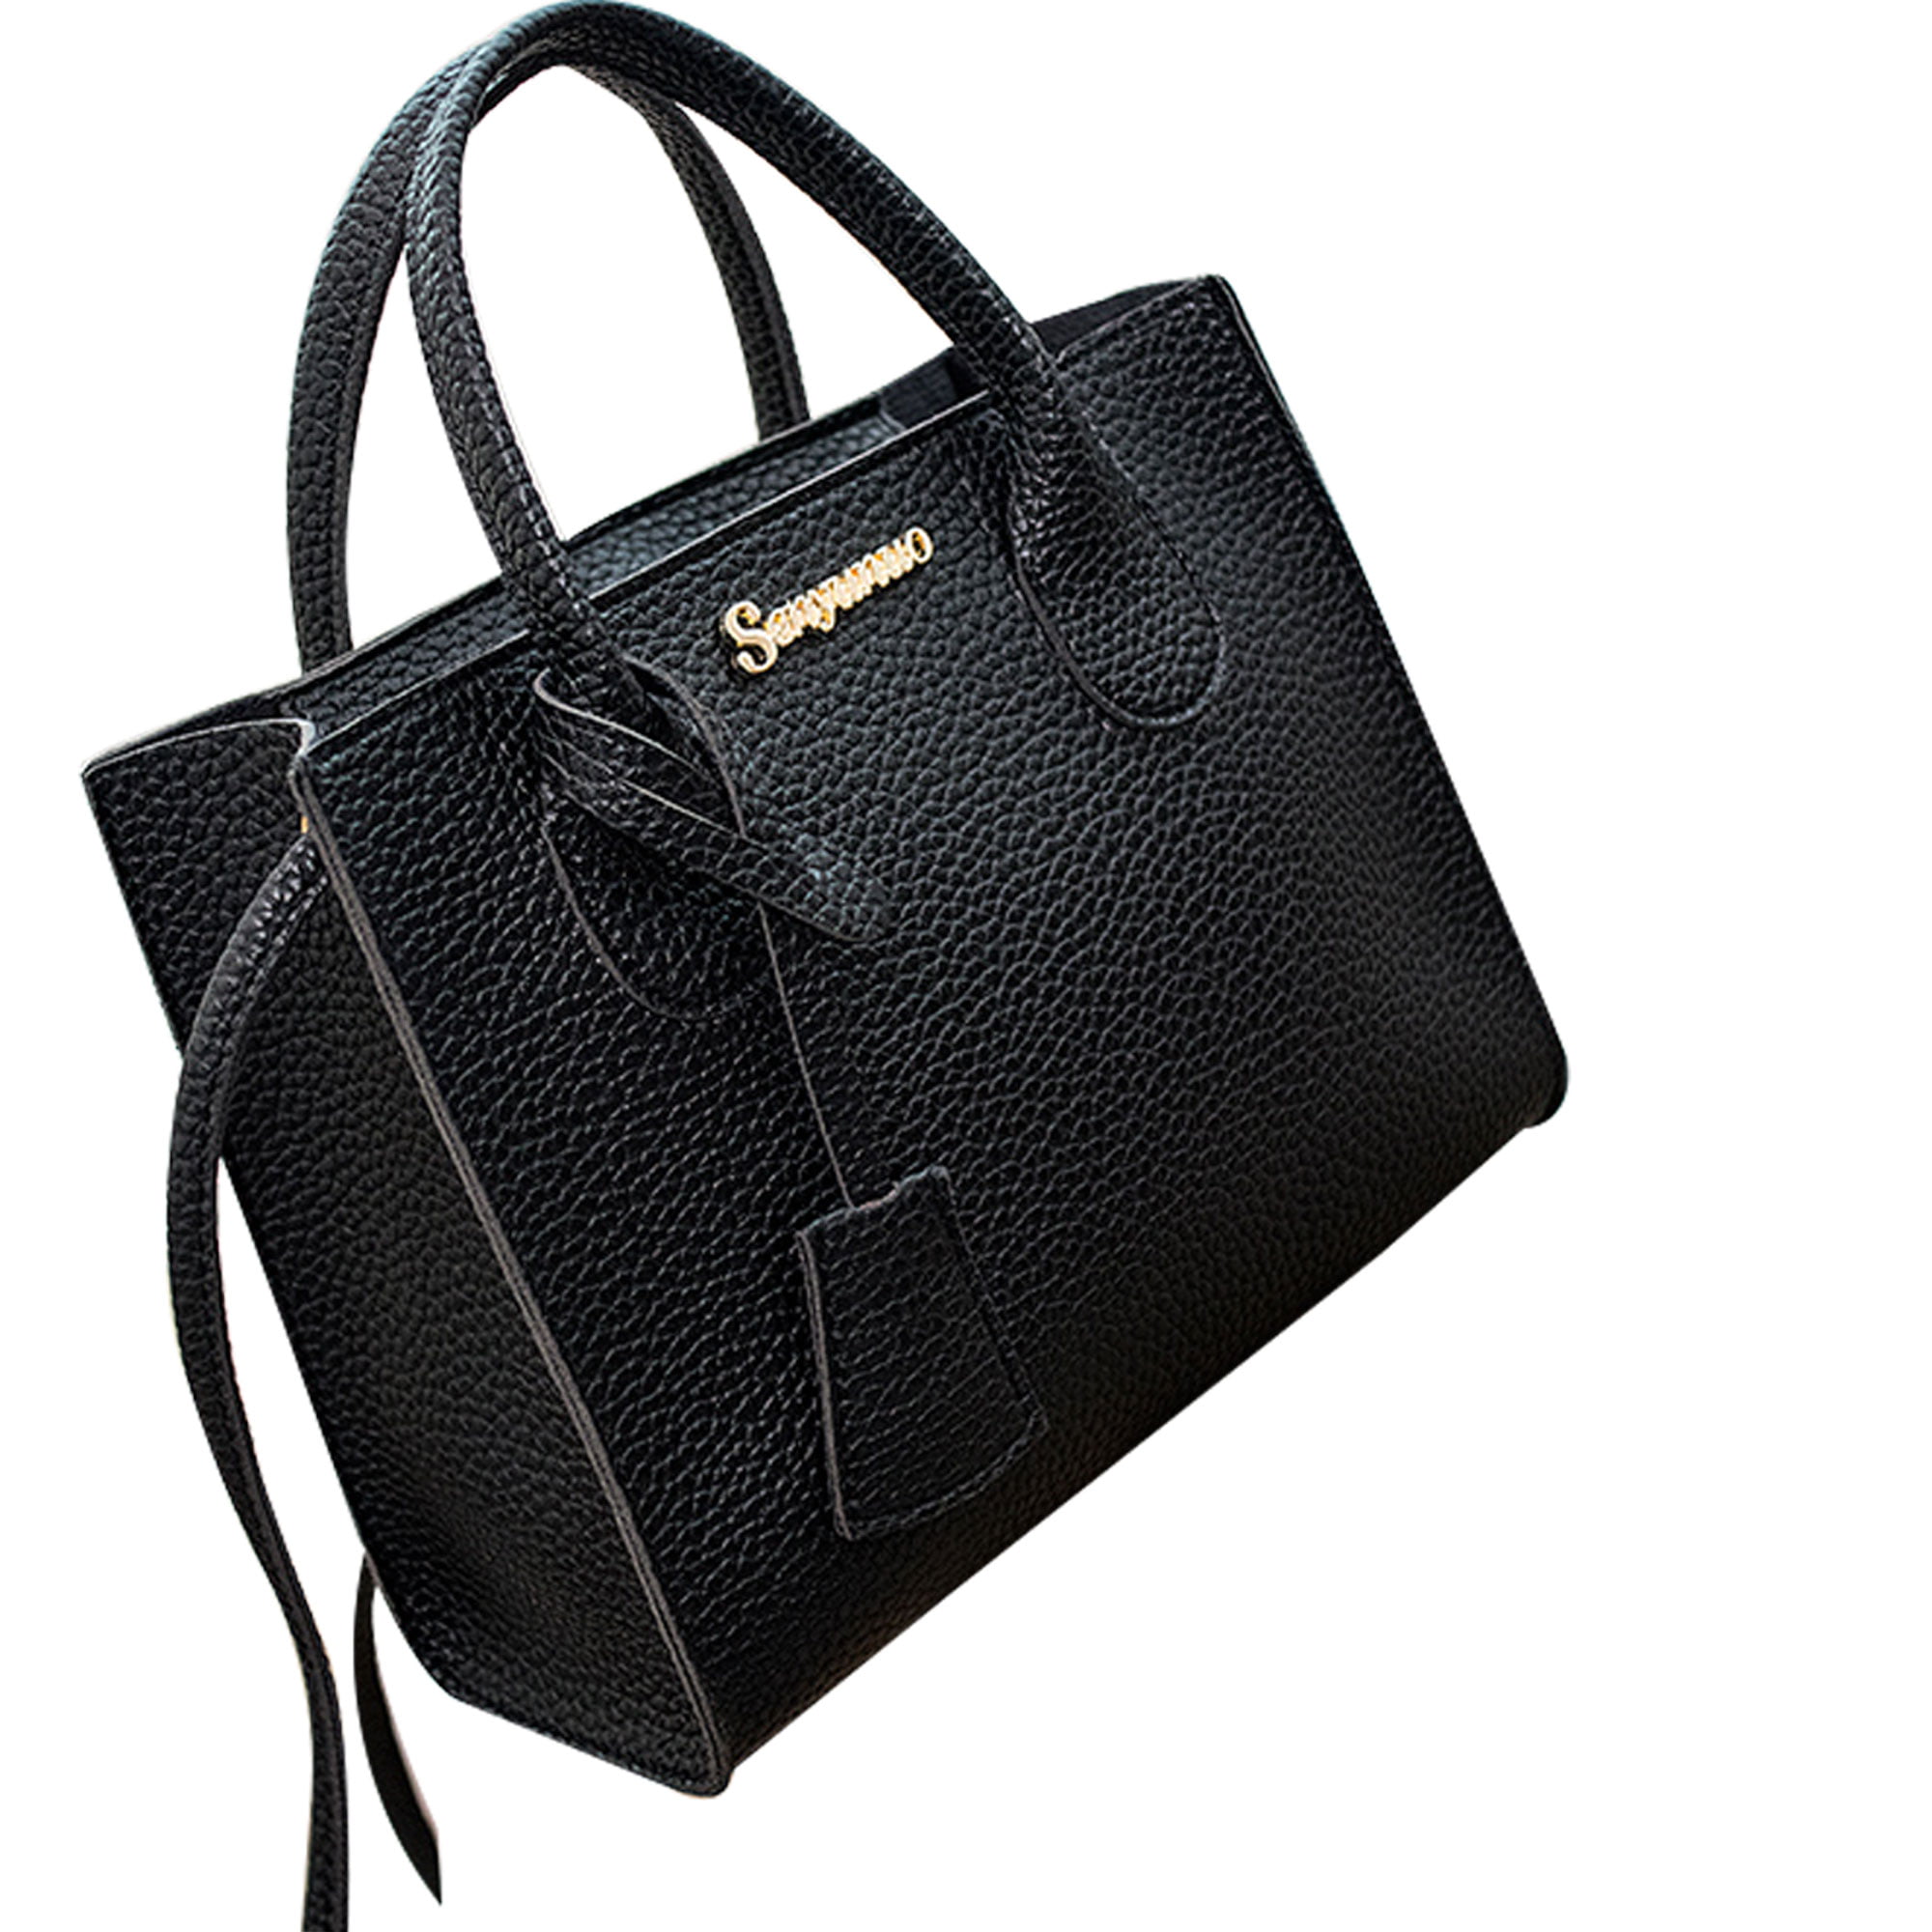 Details about   Women's Bucket Bag Luxury PU Leather Small Shoulder Messenger Lychee Handbag New